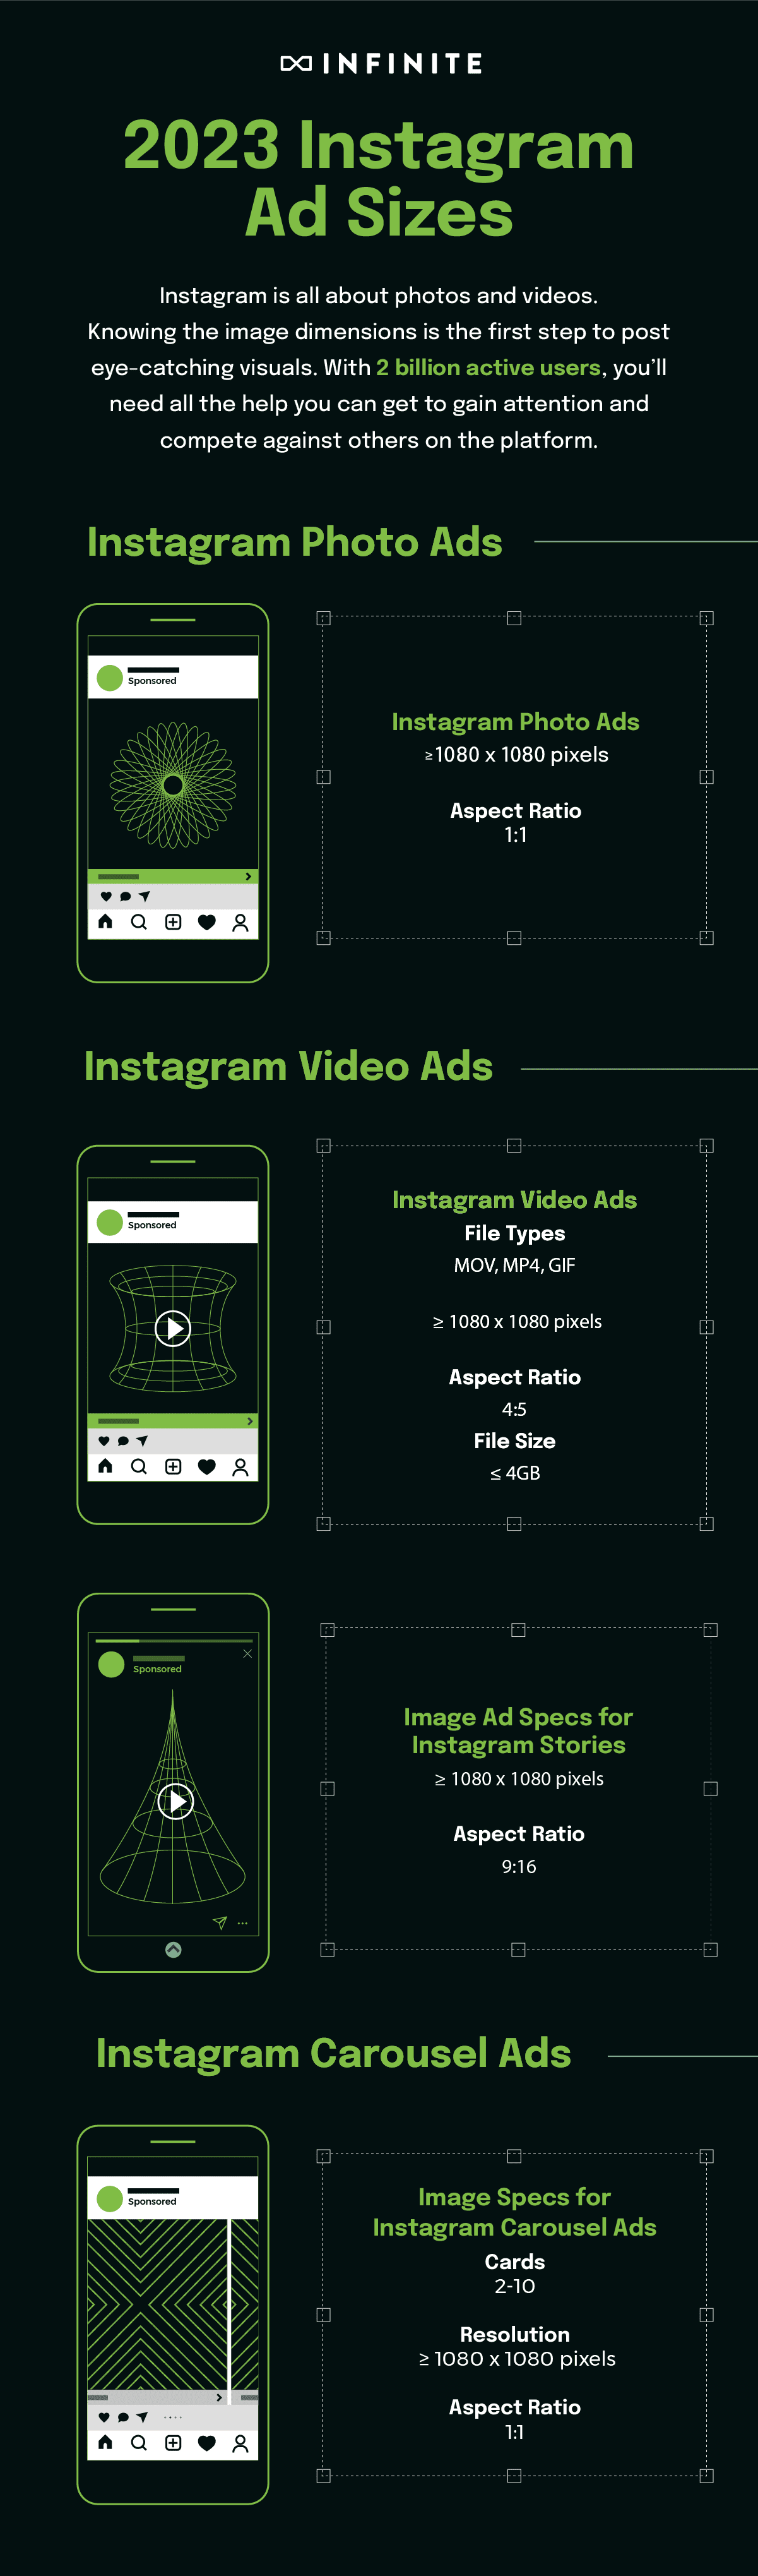 2023 Instagram Ad Sizes and Specs